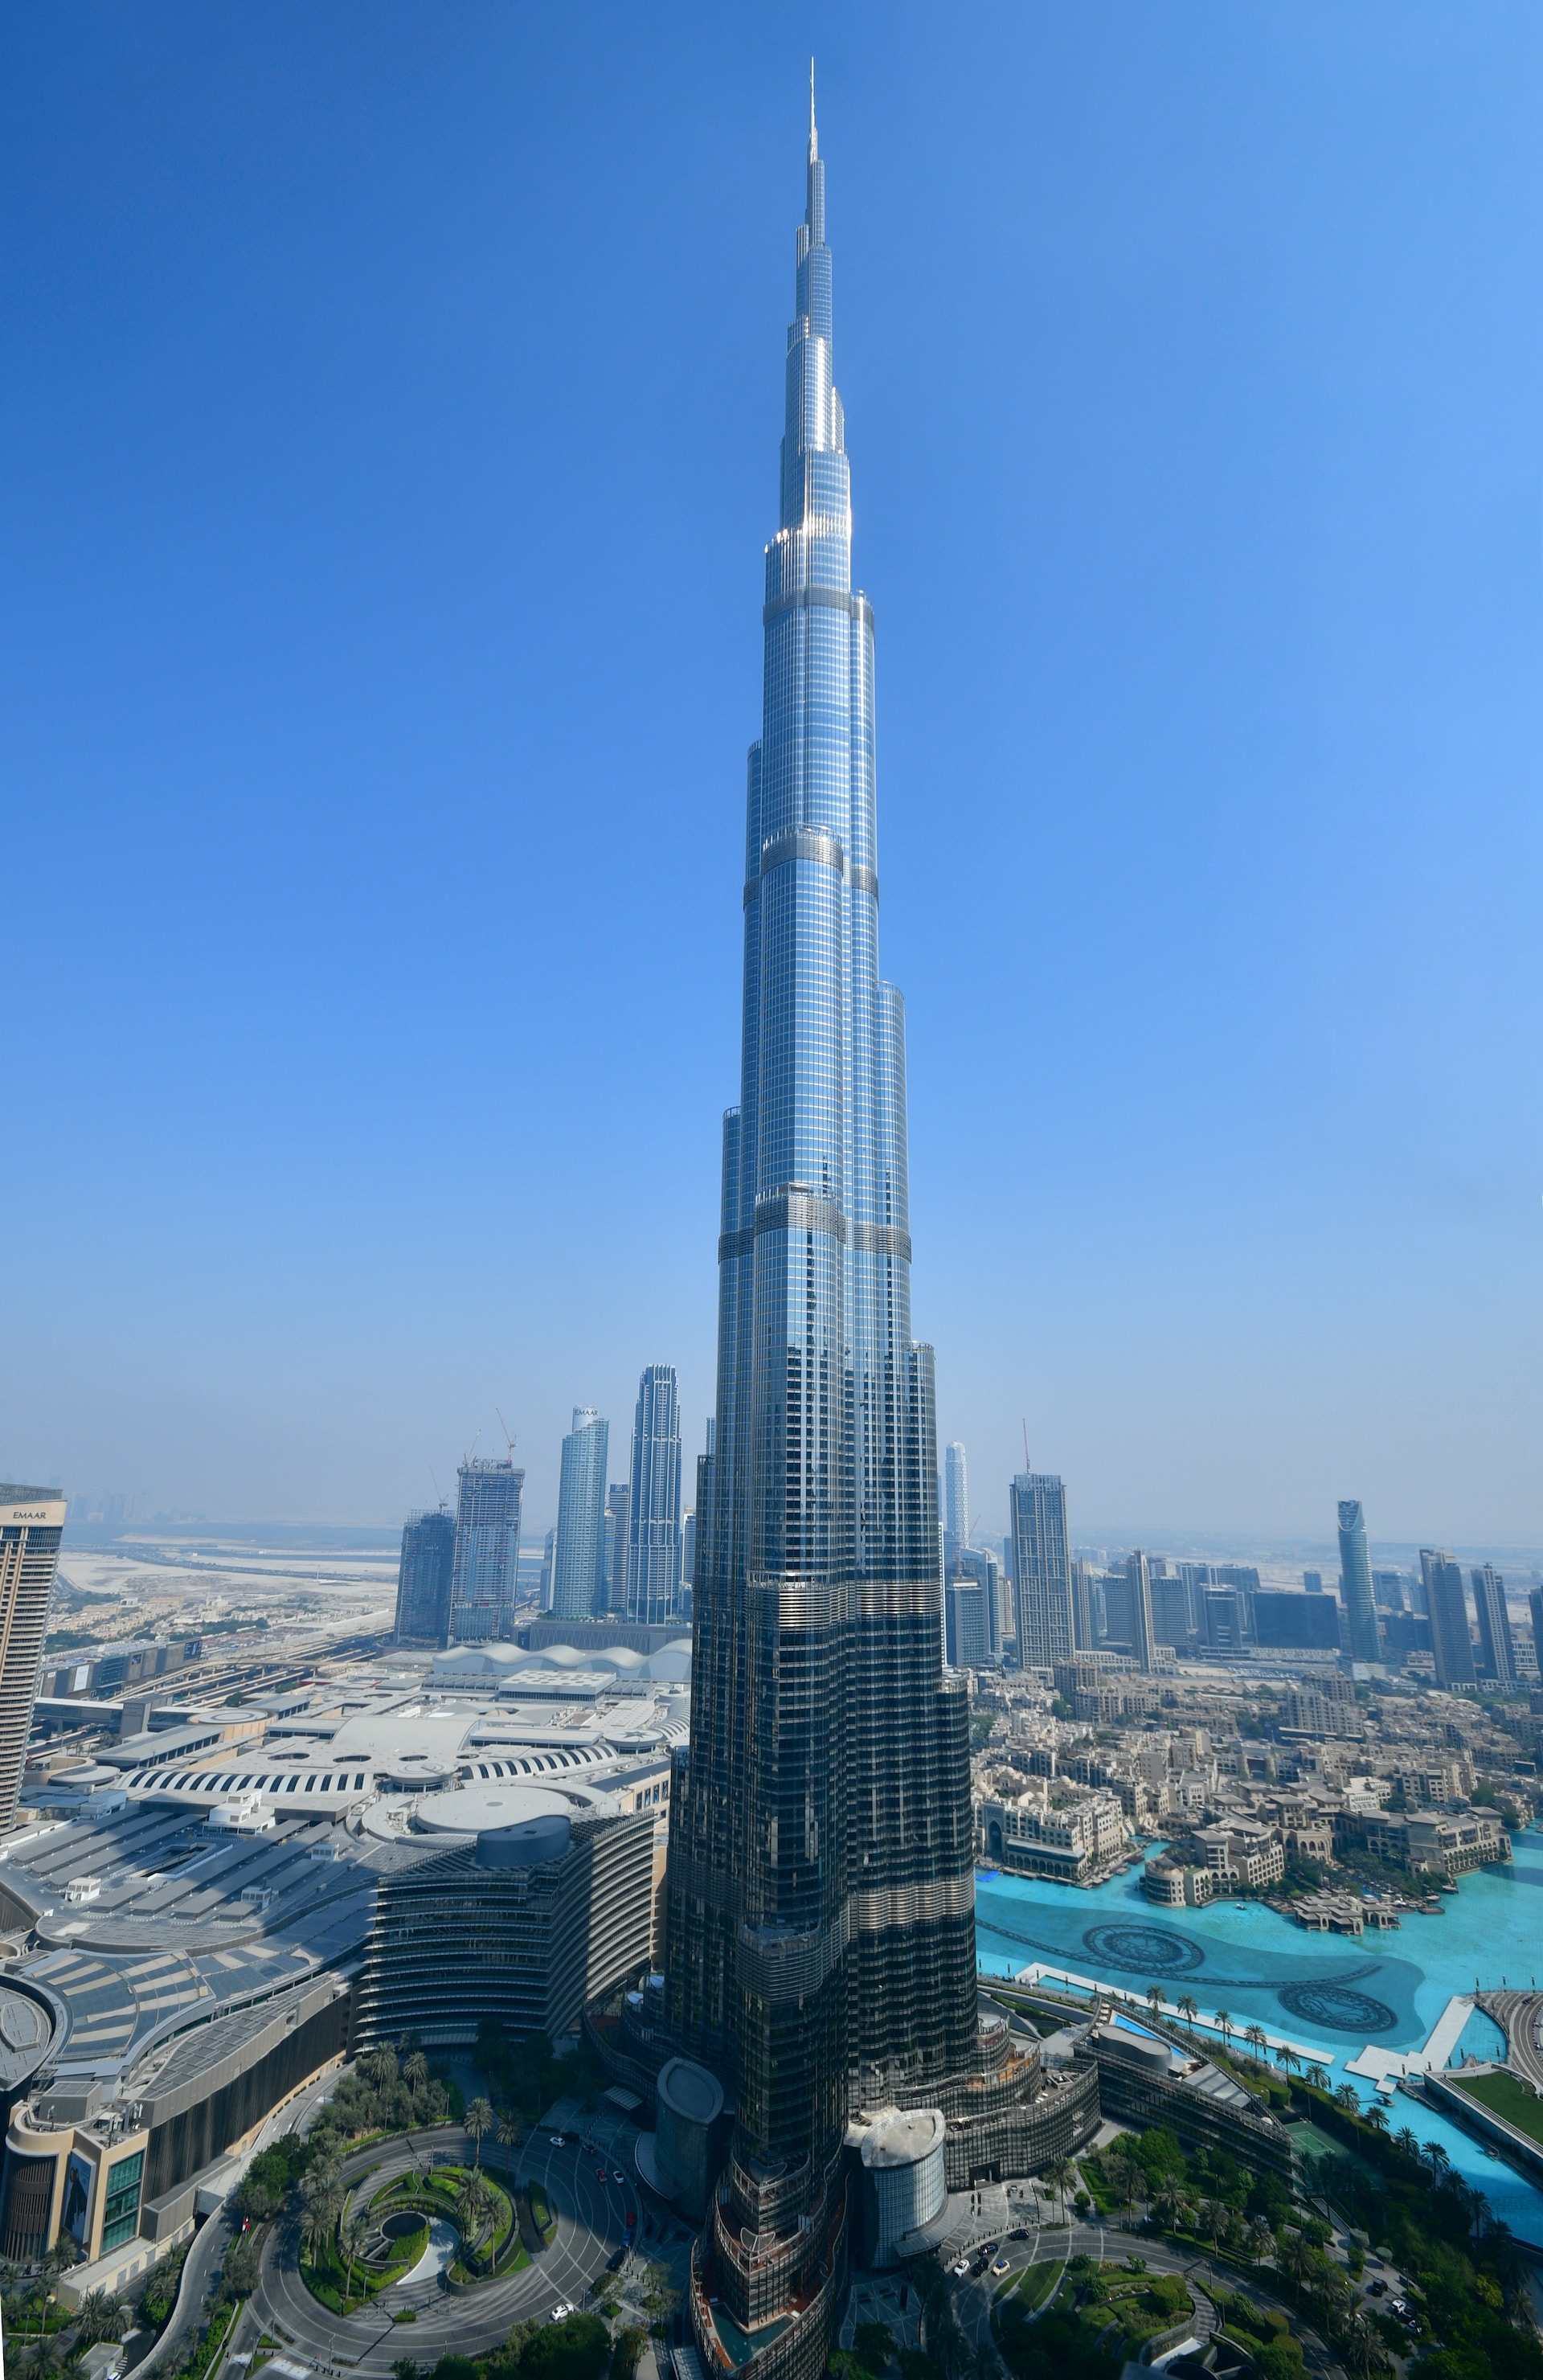 Burj Khalifa | Quelle: [Unsplash | Riyas Mohammed](https://unsplash.com/de/fotos/2quacwOKlJ8)